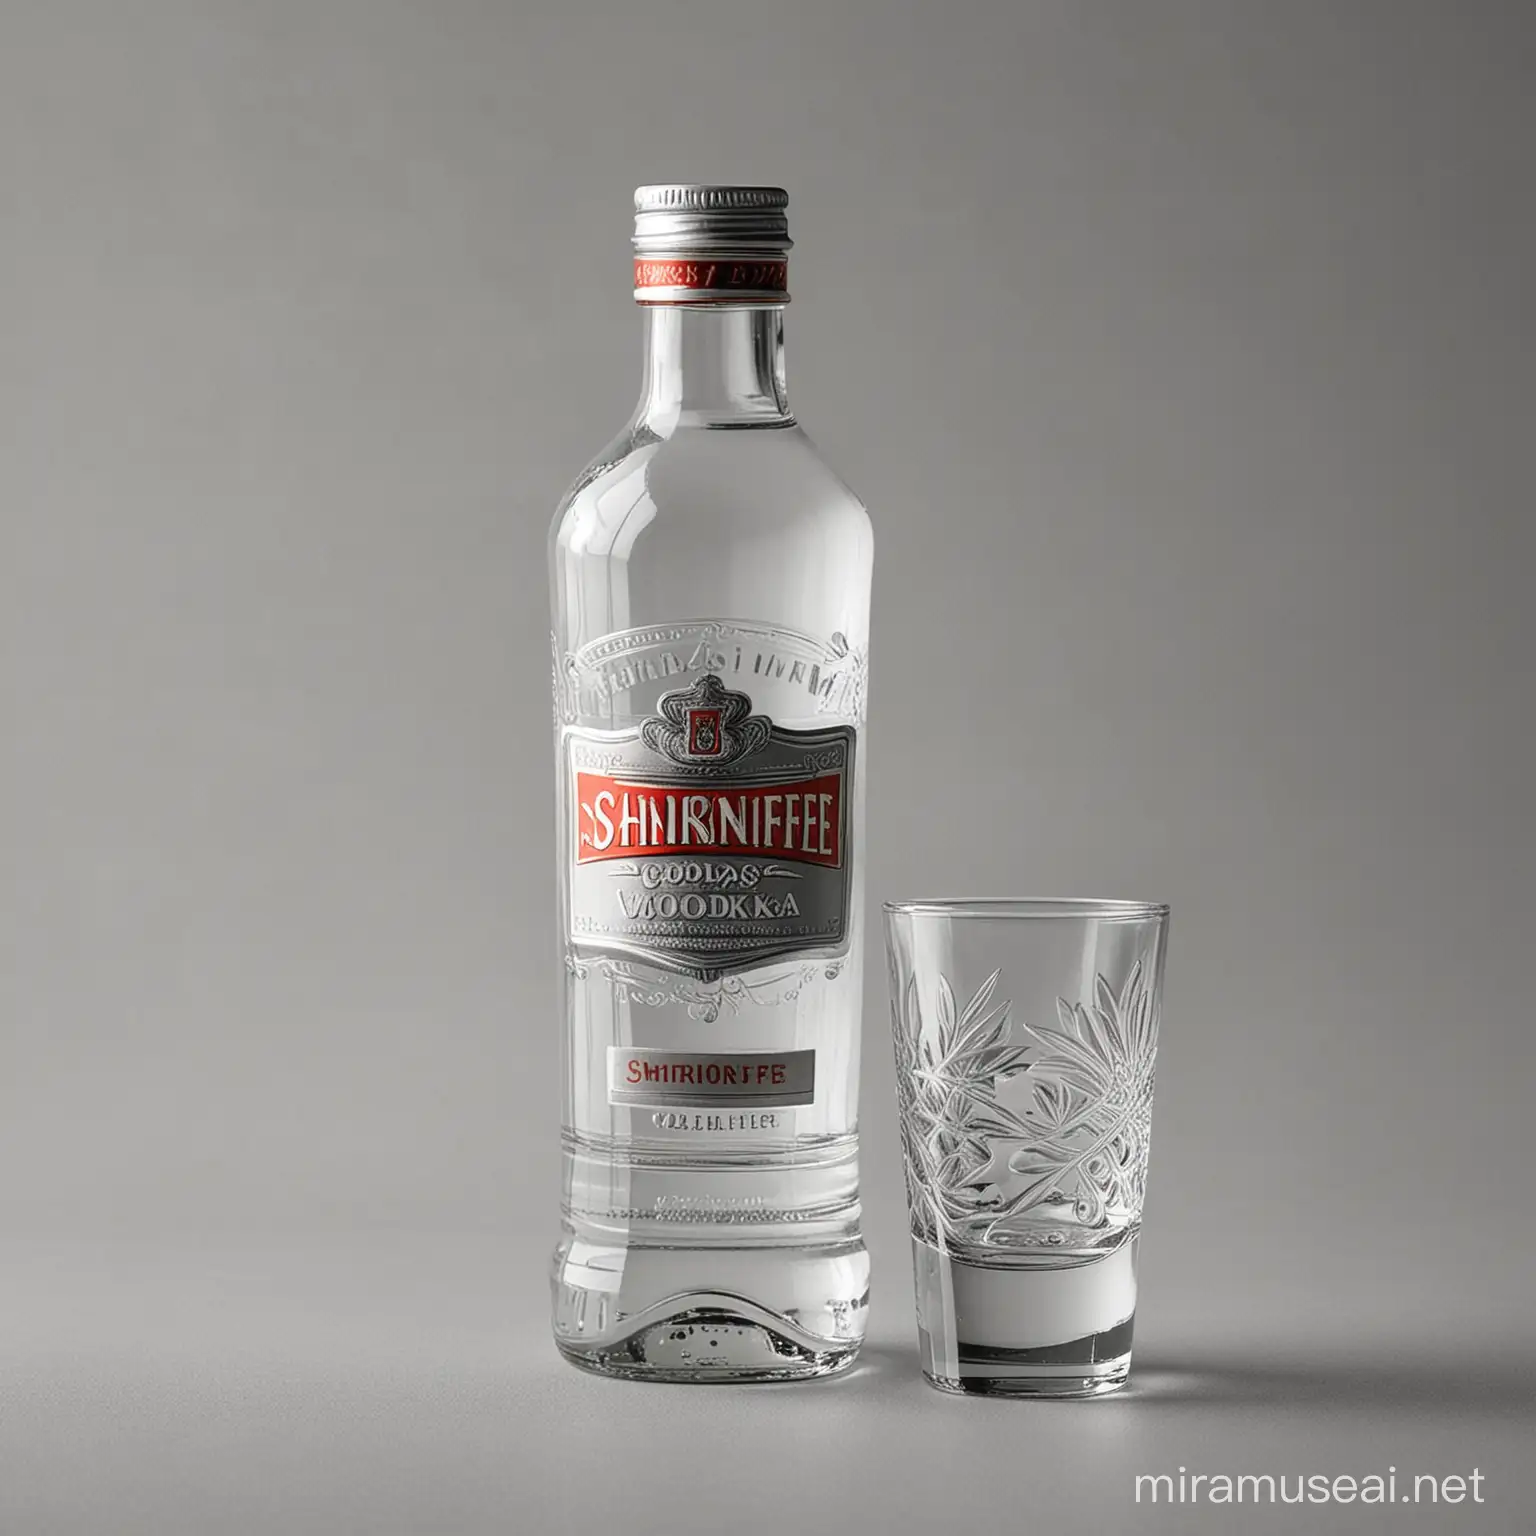 Schnaps Glasses and Smirnoff Vodka Bottle on Gray Background